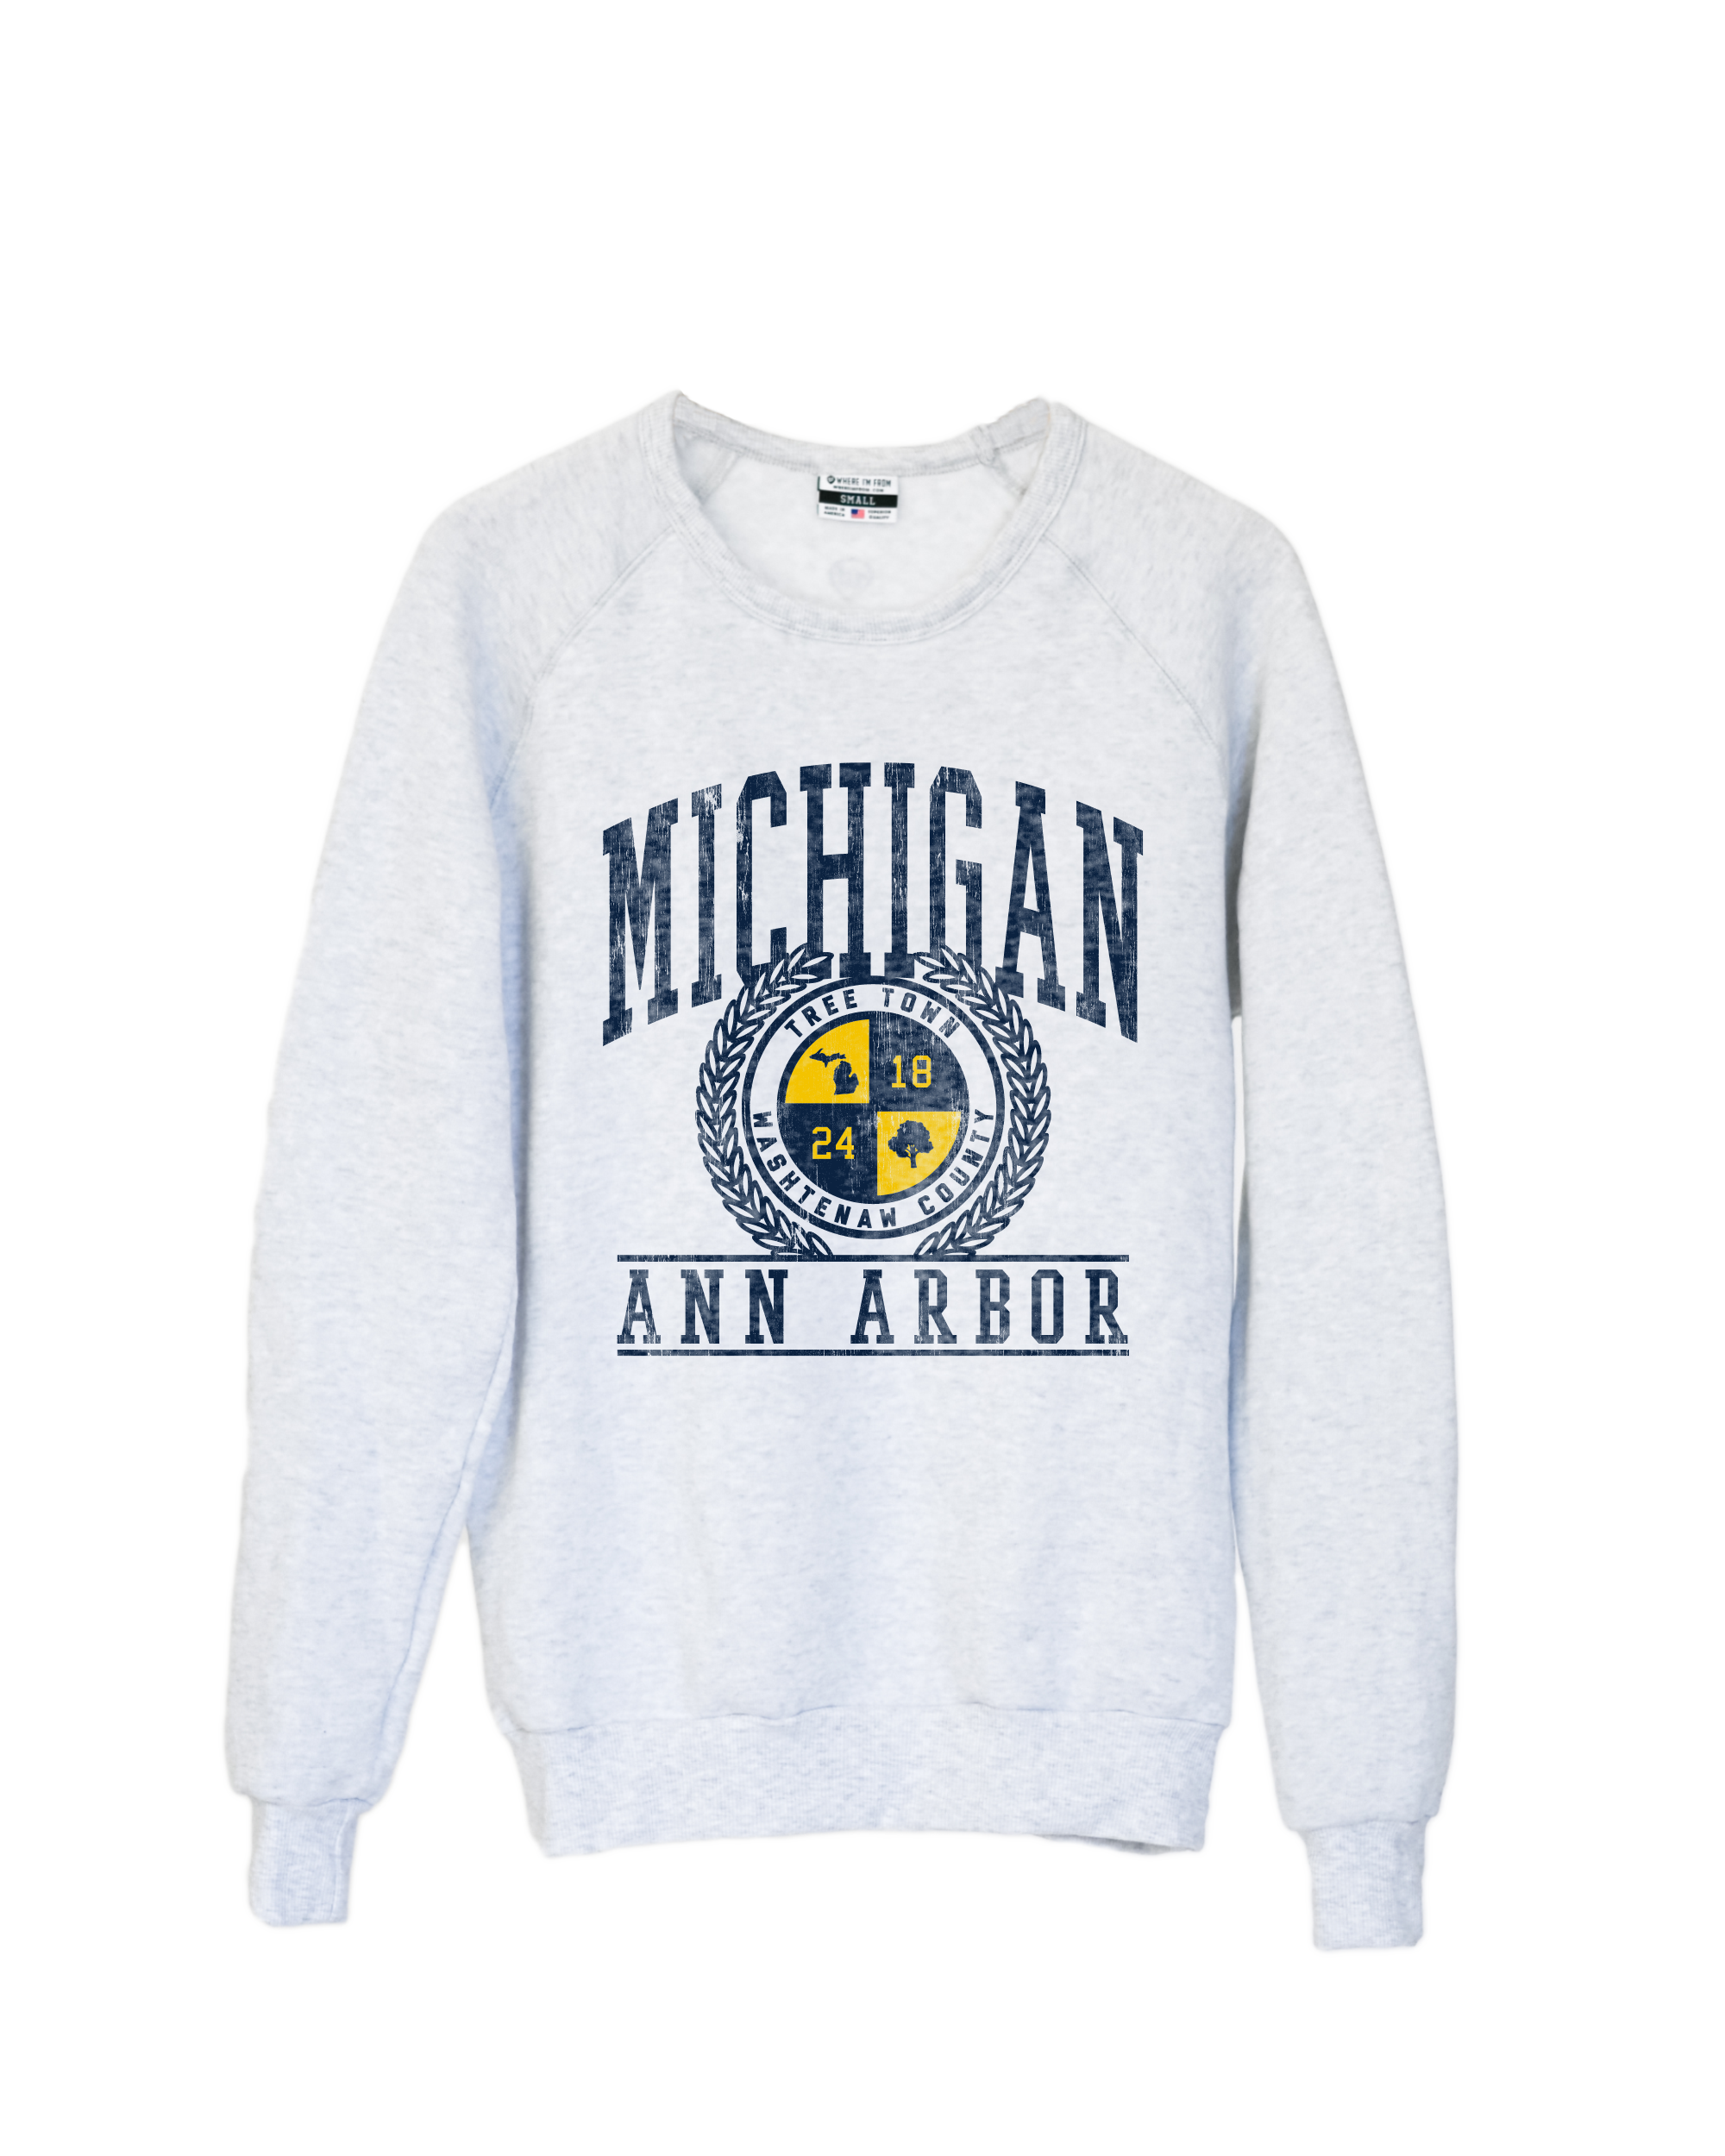 Michigan Ann Arbor Ash Sweatshirt